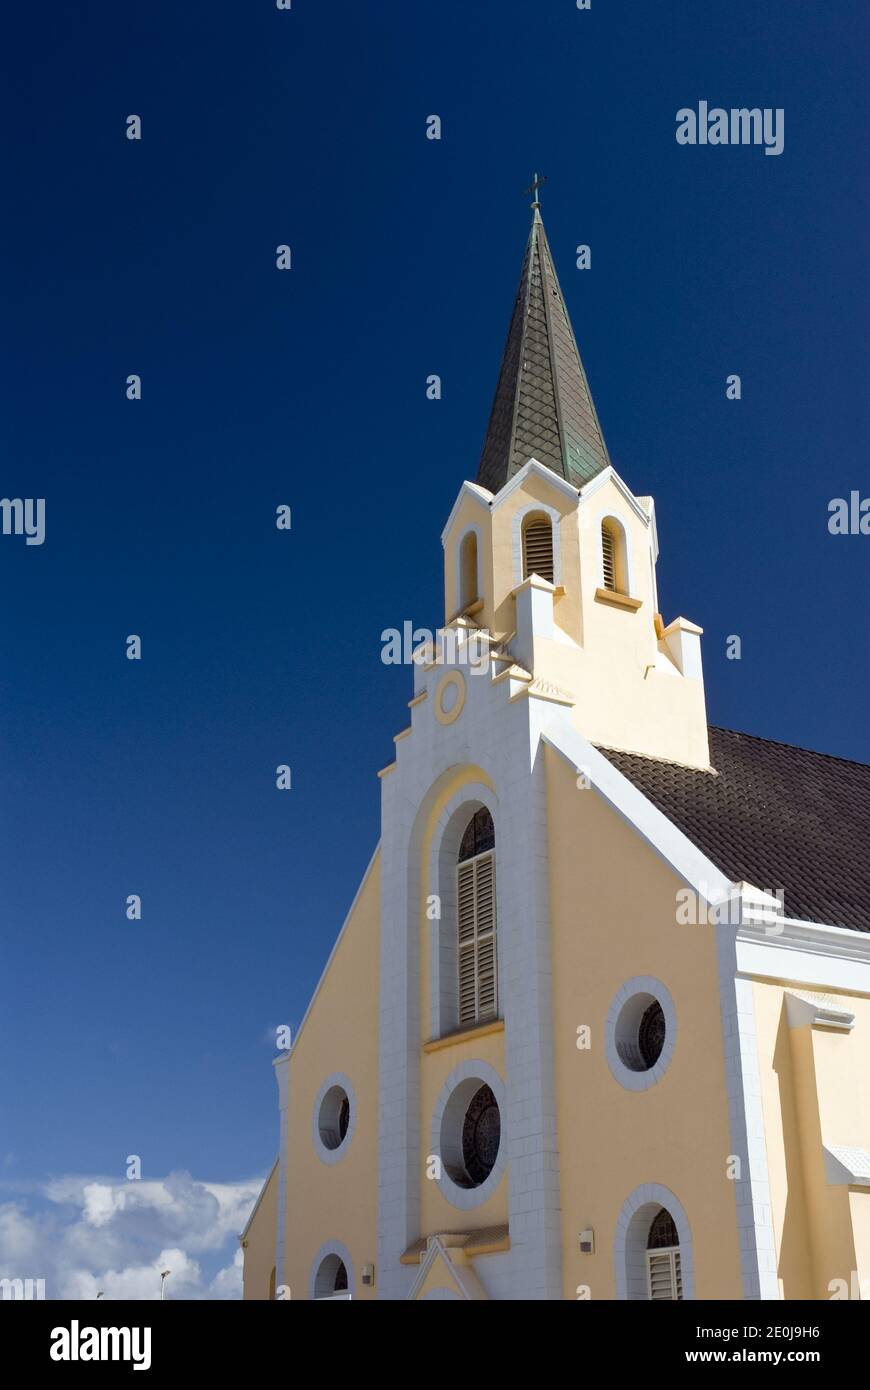 The historic and colorful St. Anna's Catholic Church, Noord, Aruba. Stock Photo